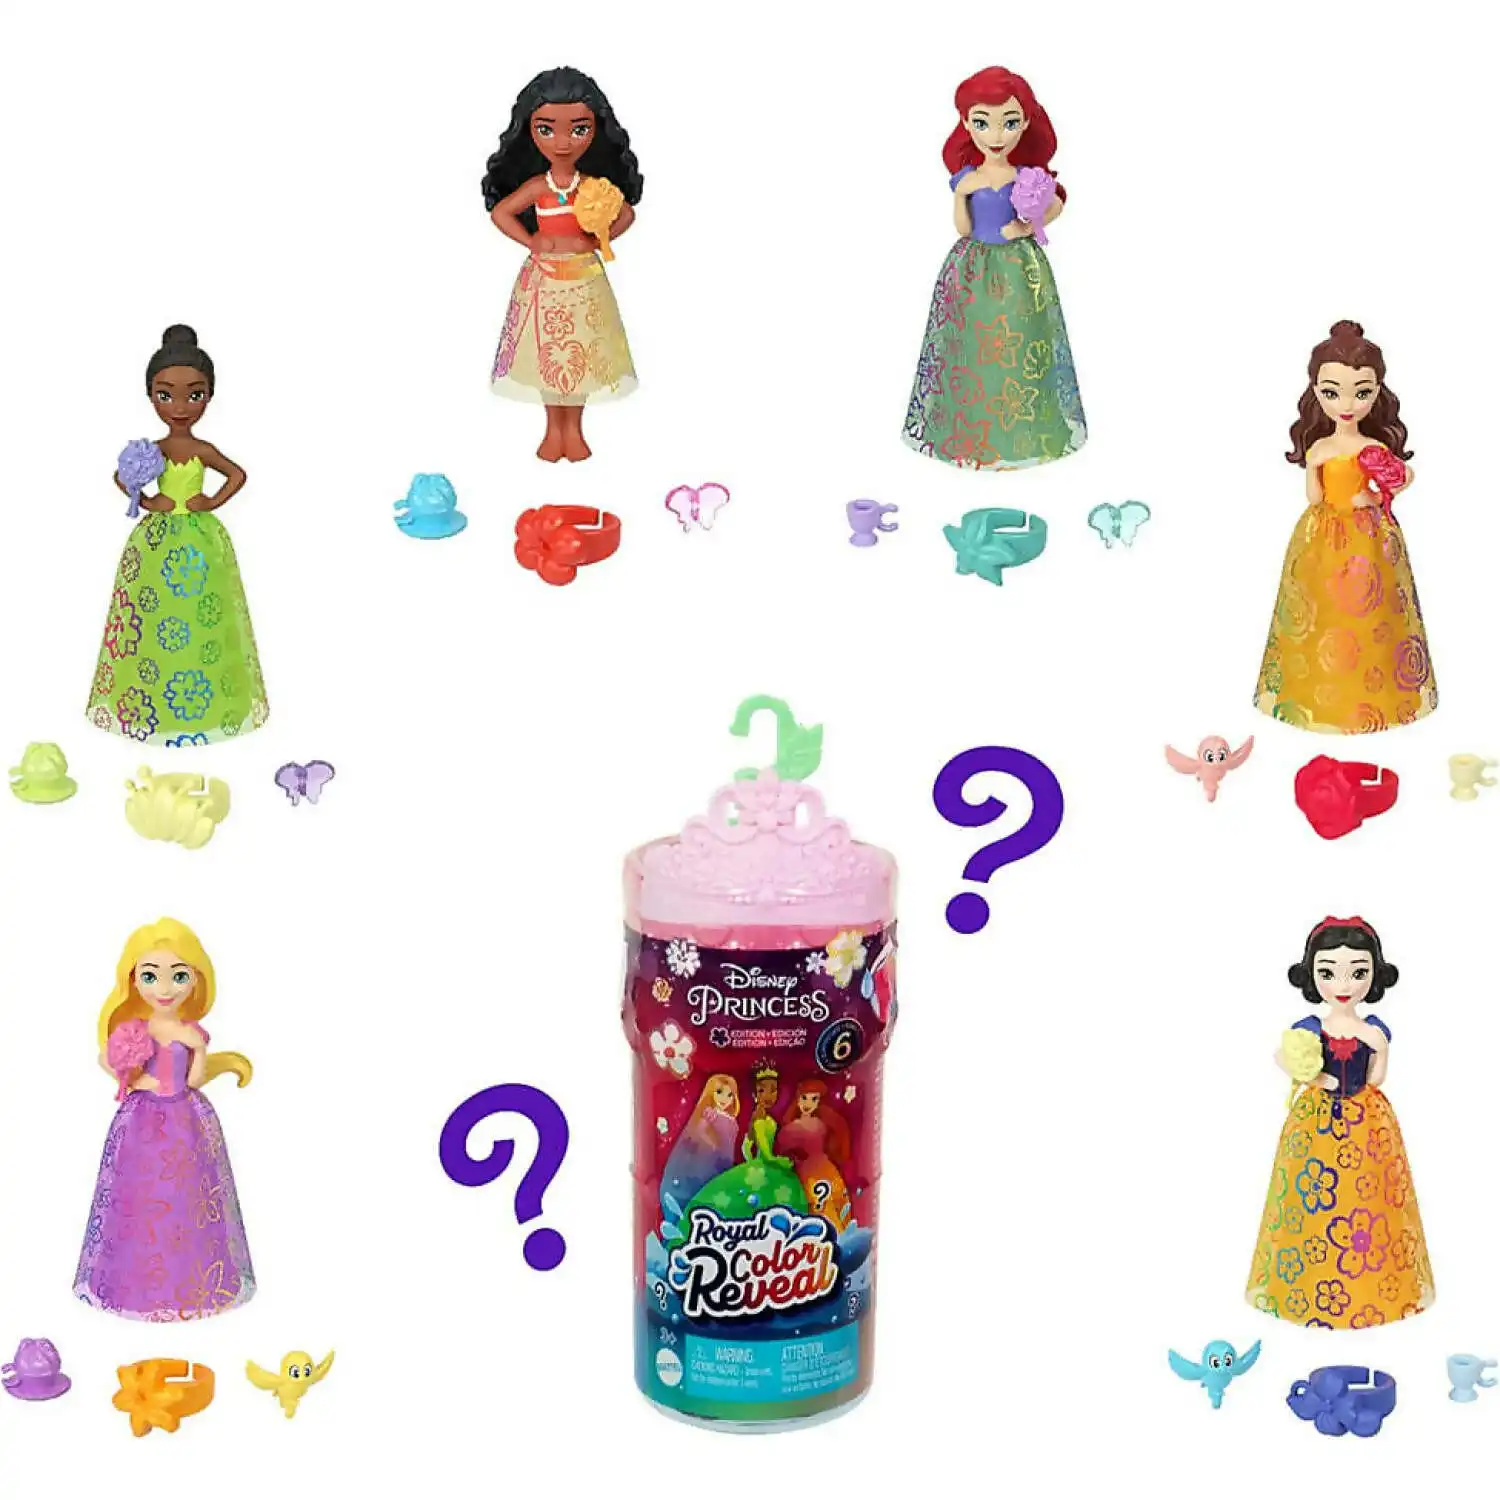 Disney Princess - Royal Colour Reveal Doll Assorted Styles - Mattel